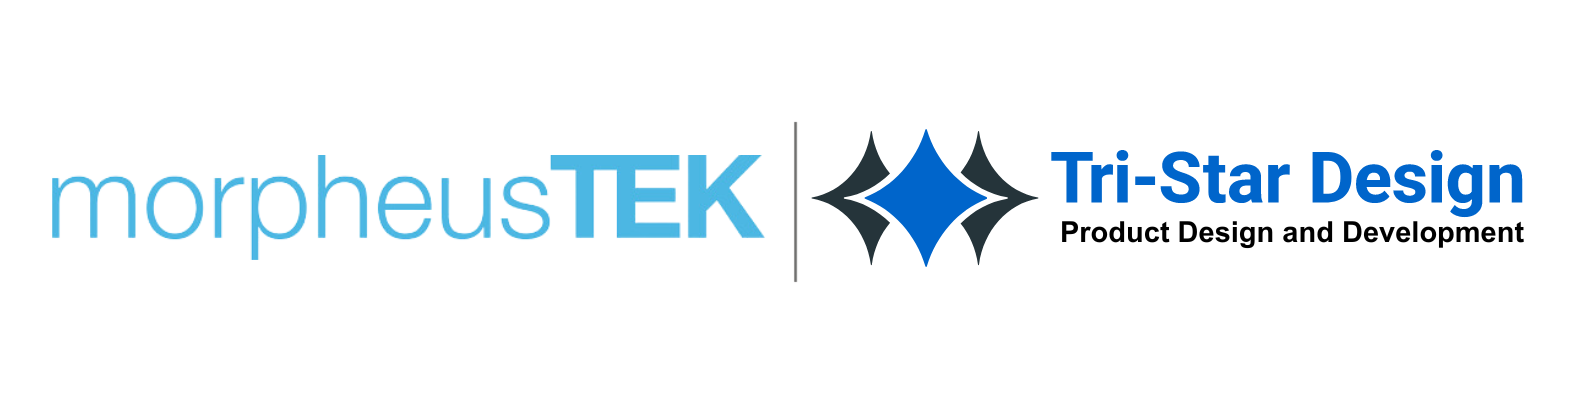 Tri-Star Design and morpheusTEK Partnership Announcement